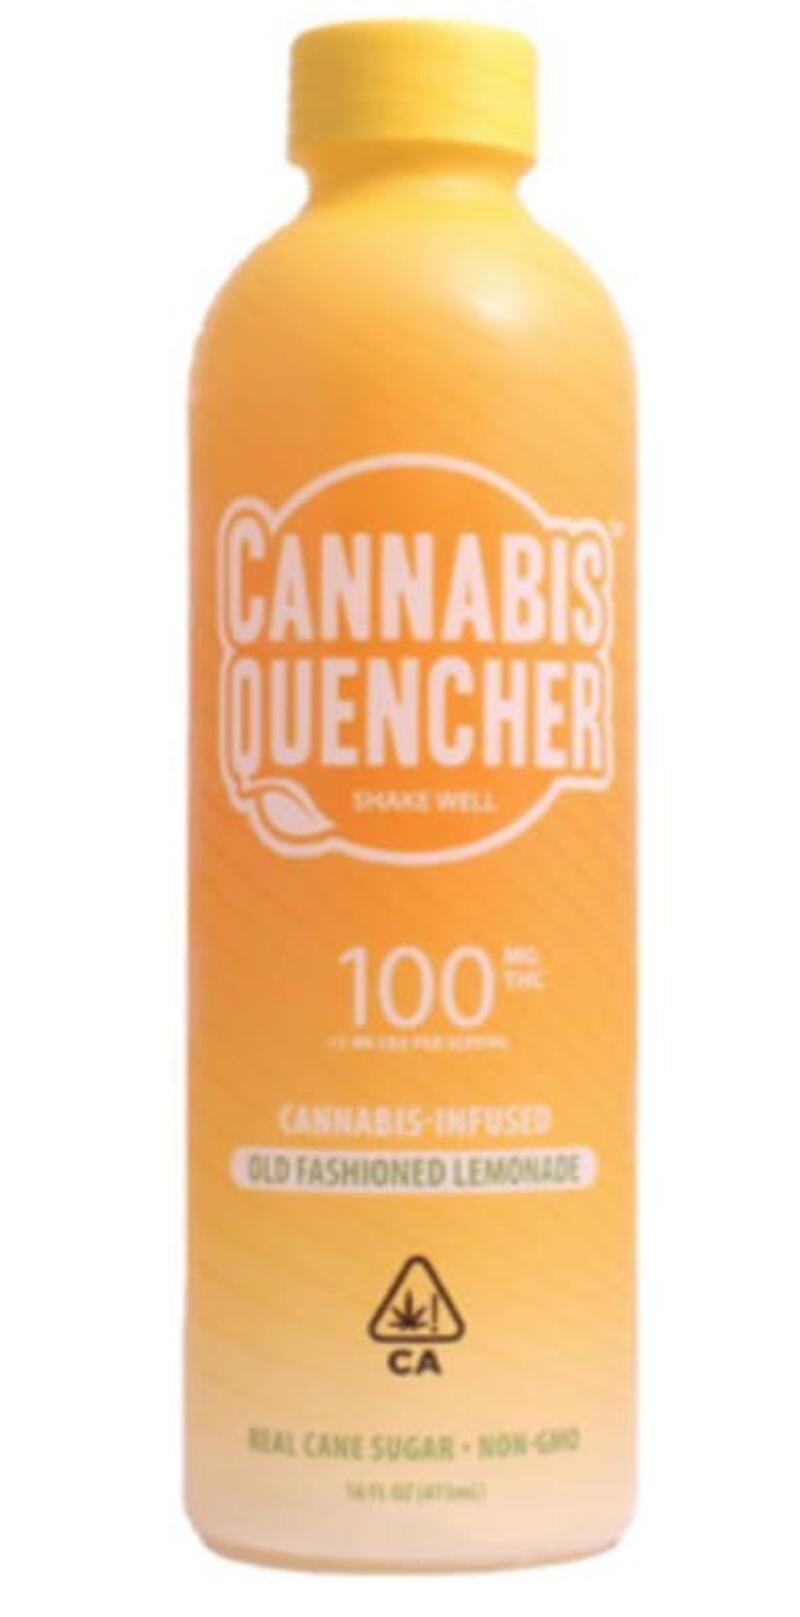 Cannabis Quencher - Old Fashion Lemonade 100mg